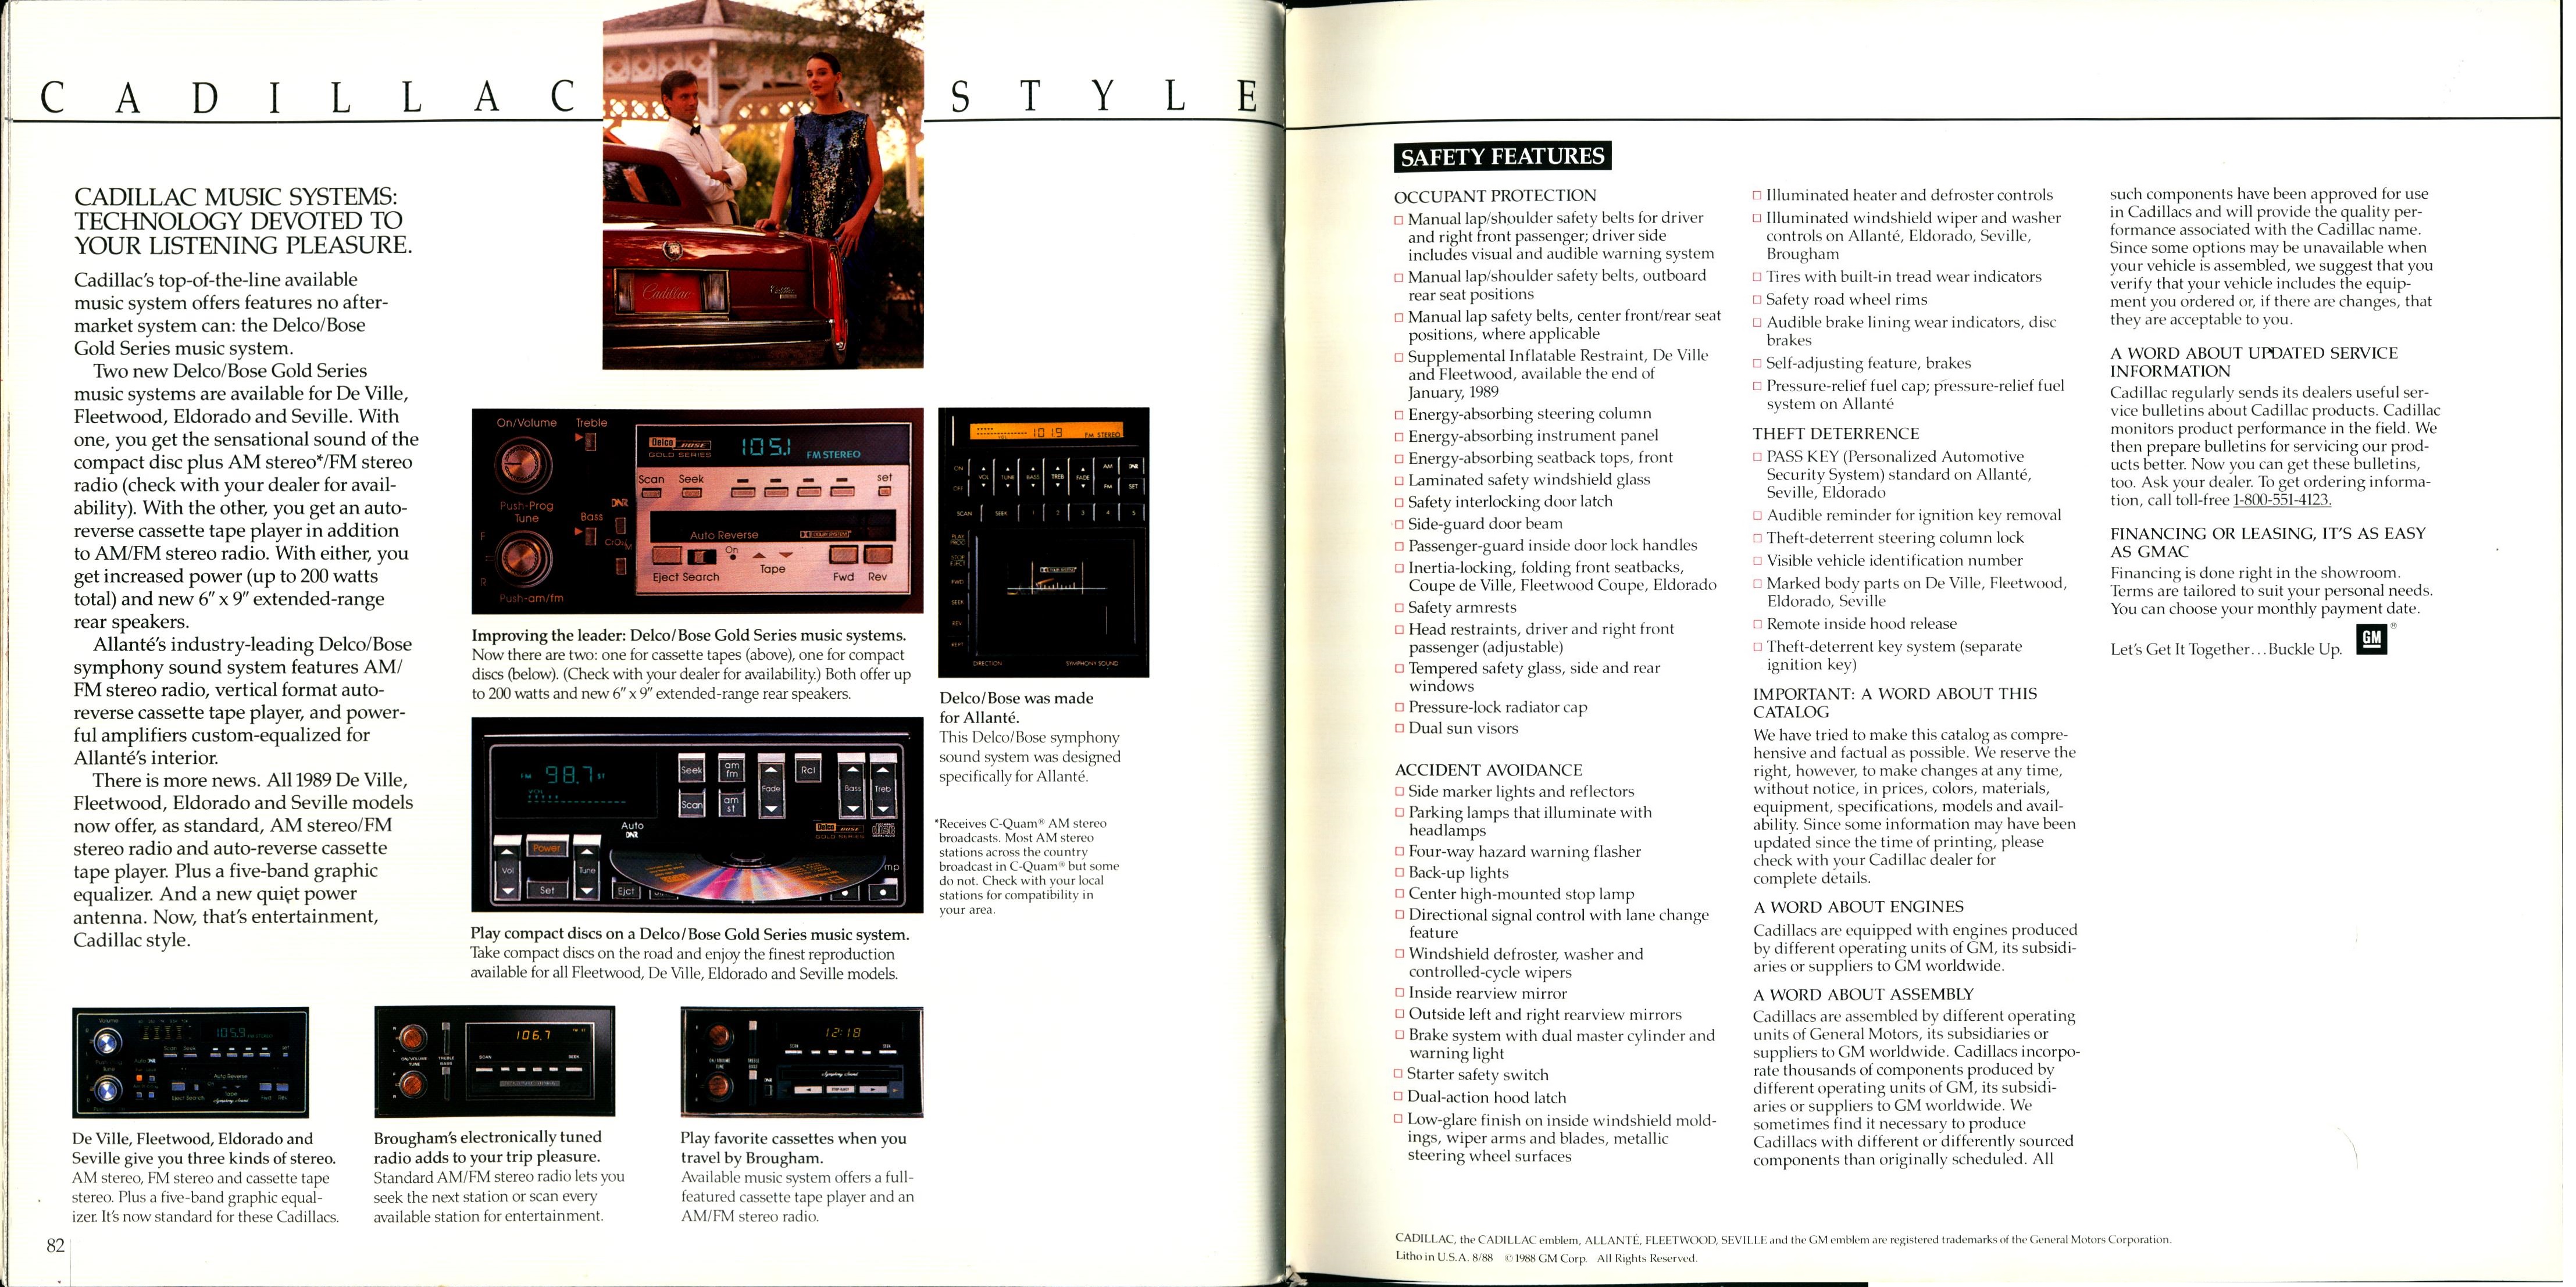 1989 Cadillac Full Line Prestige Brochure 82-83